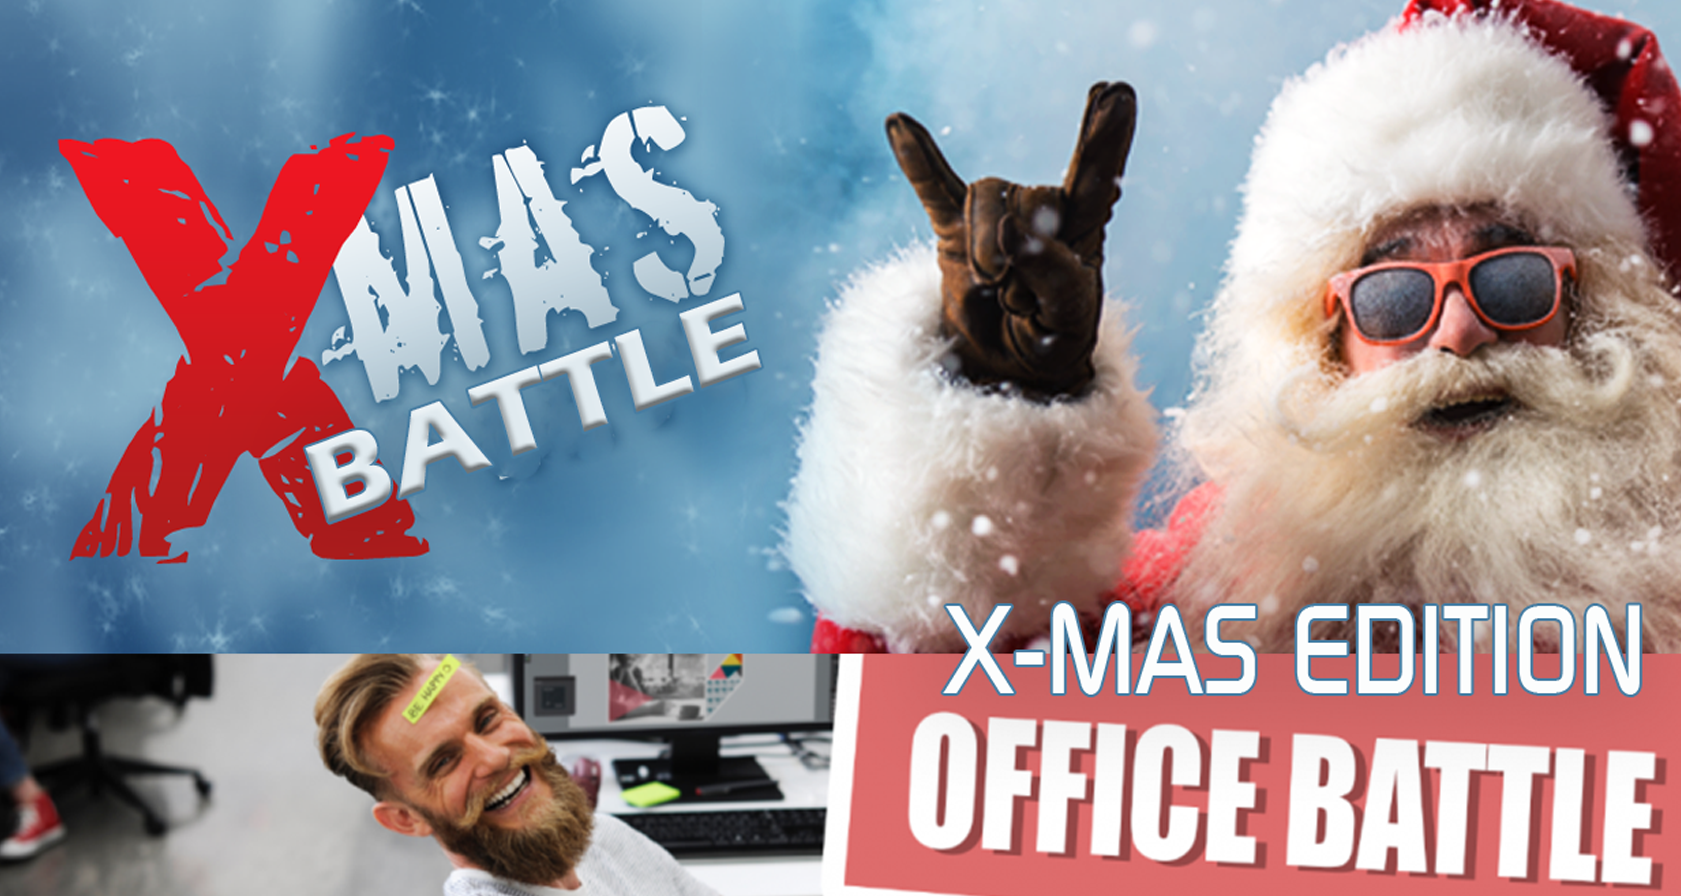 X-mas Office battle